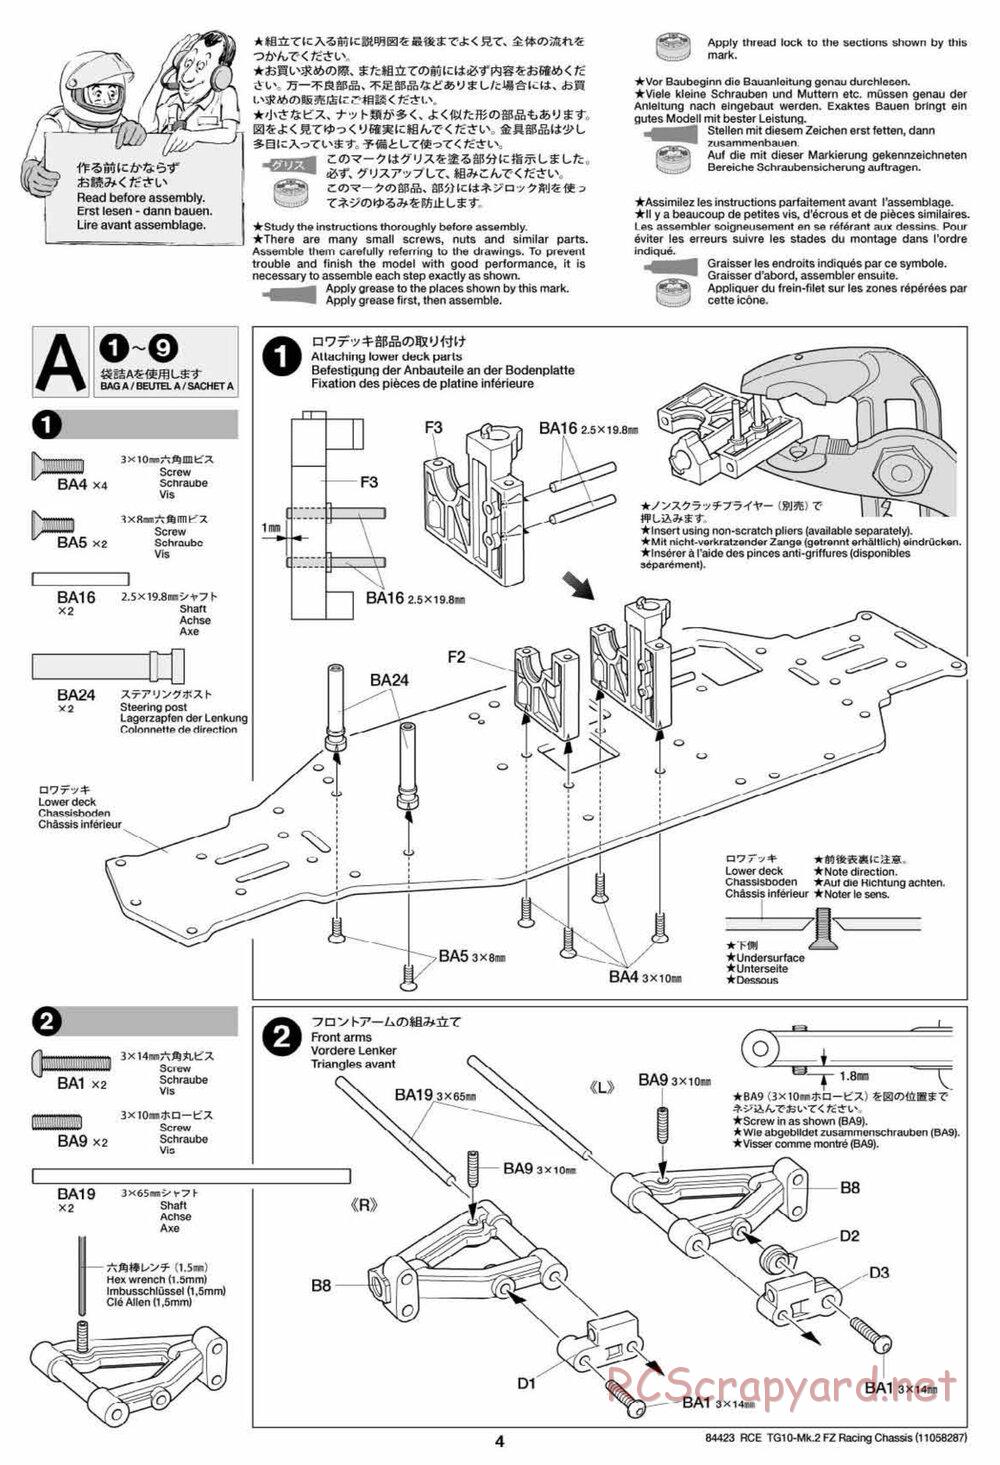 Tamiya - TG10 Mk.2 FZ Racing Chassis - Manual - Page 4